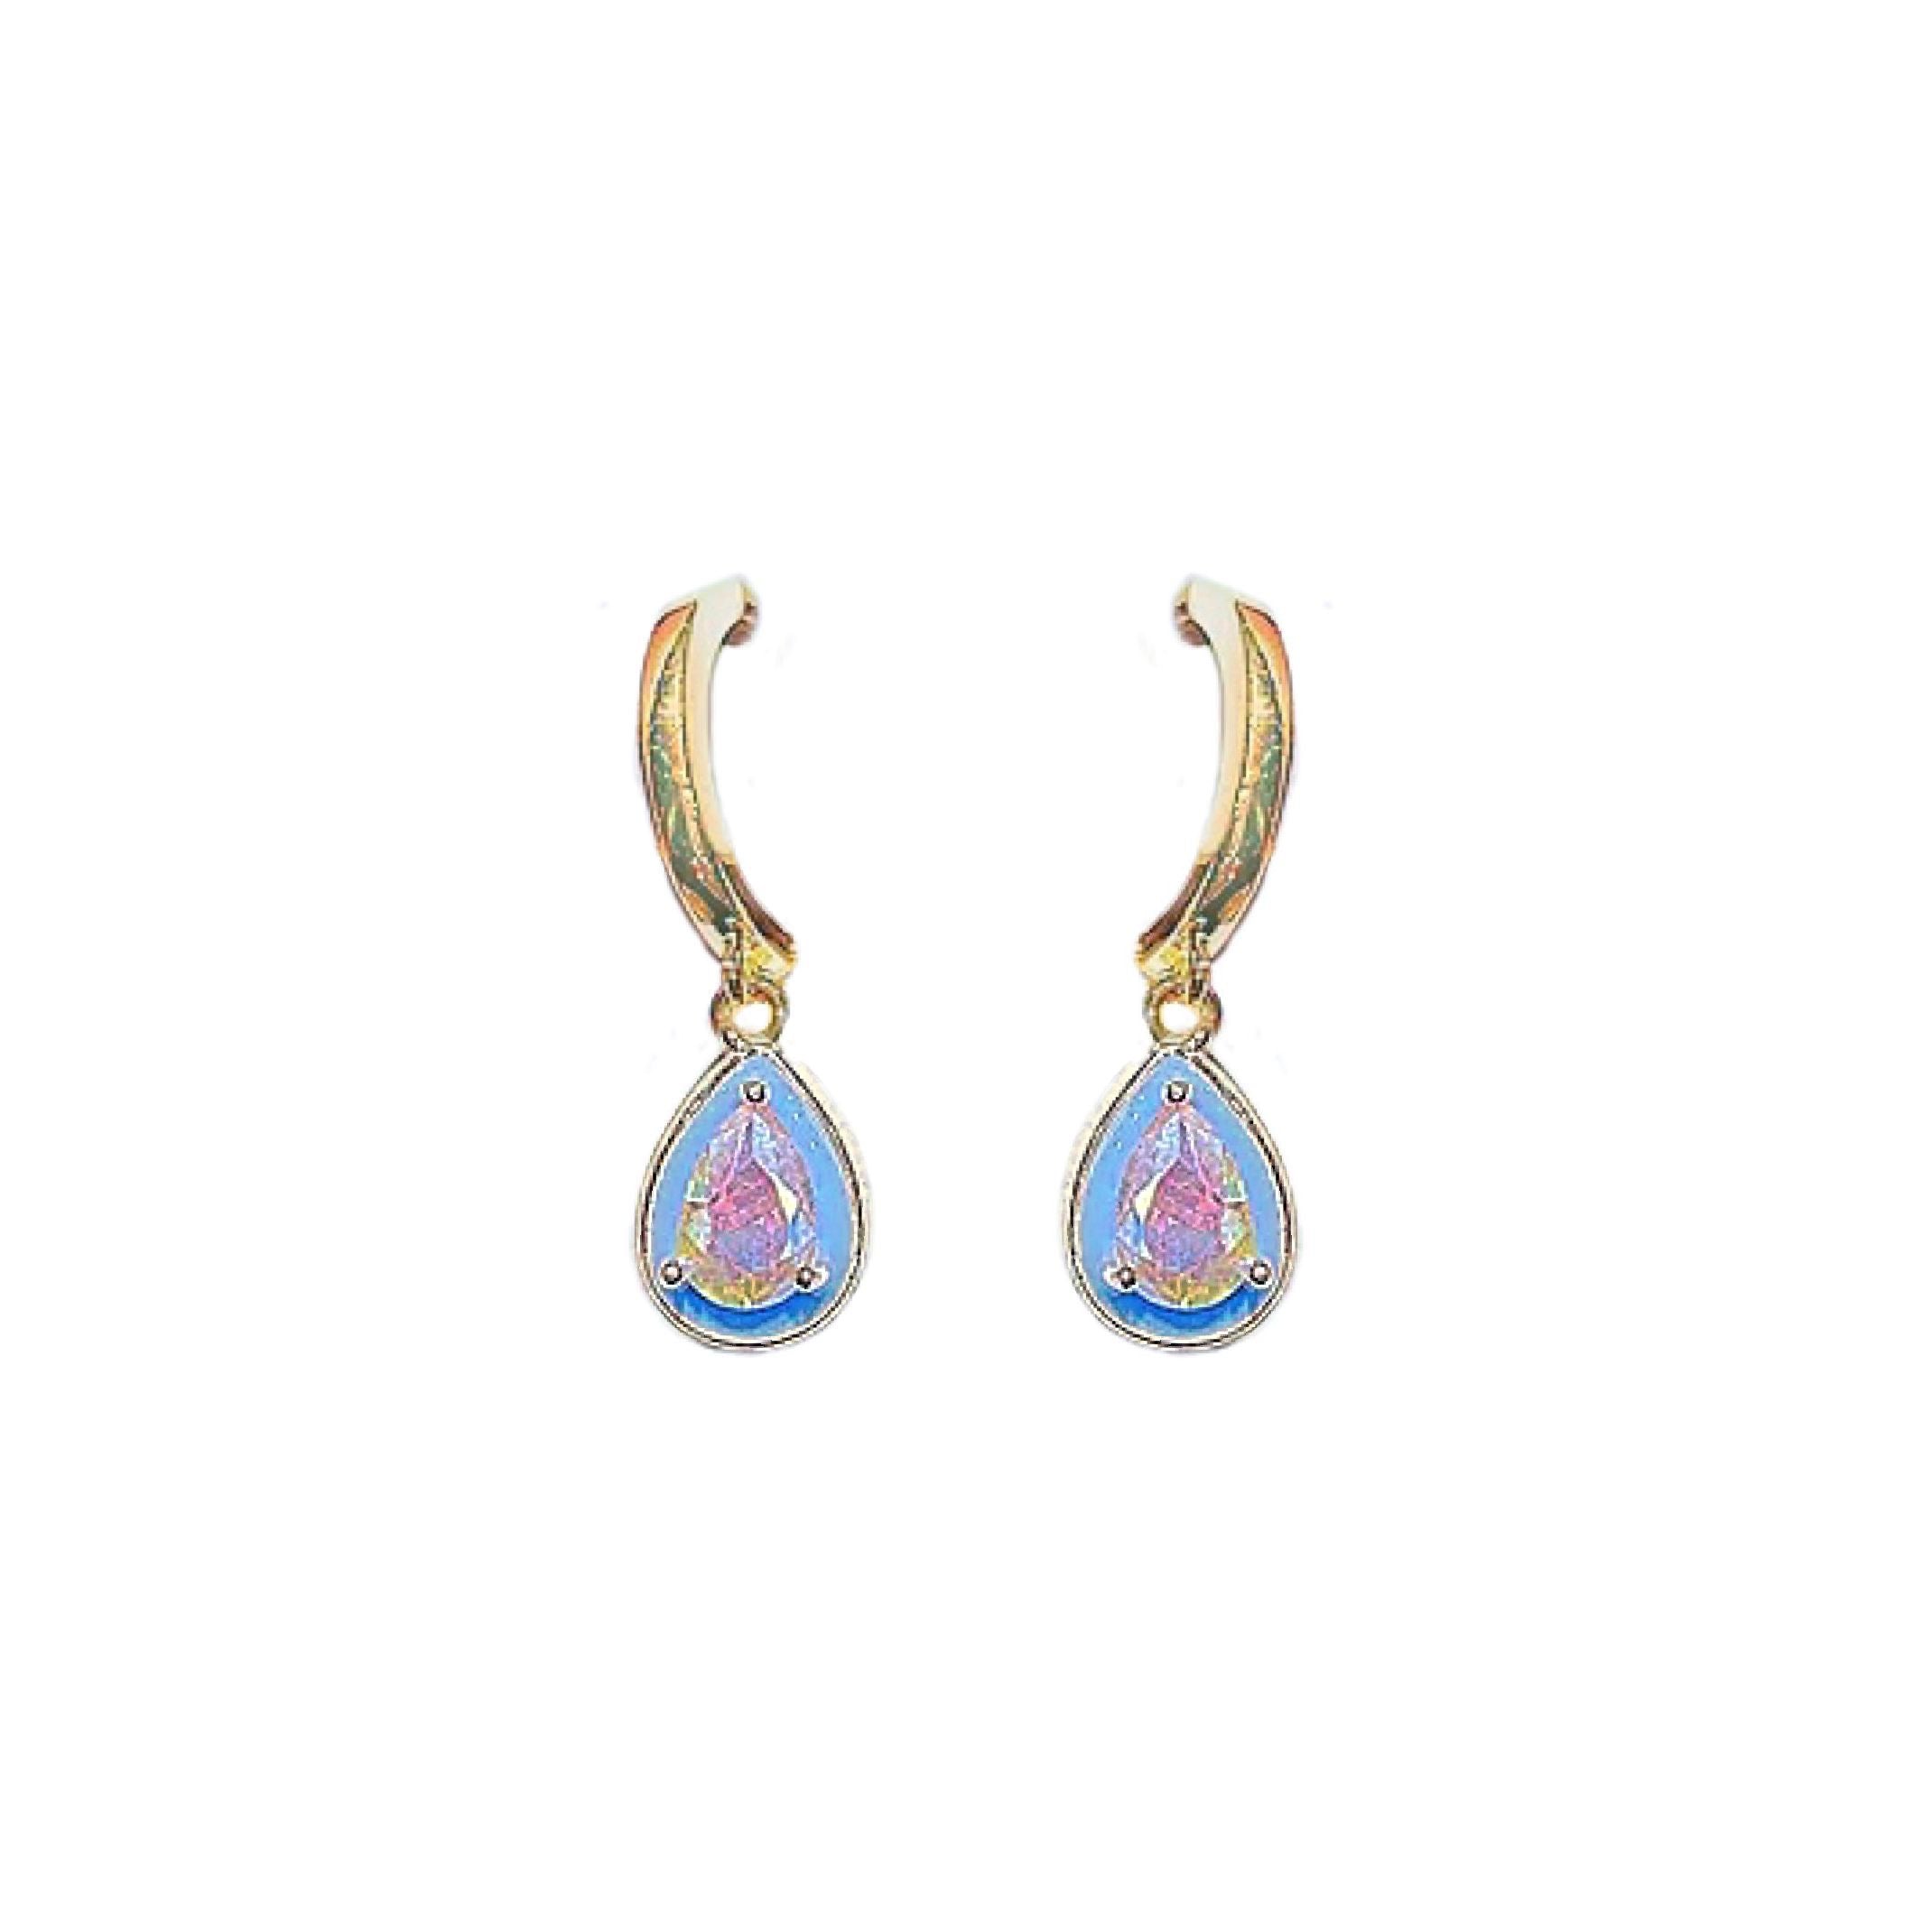 Light blue huggie earrings